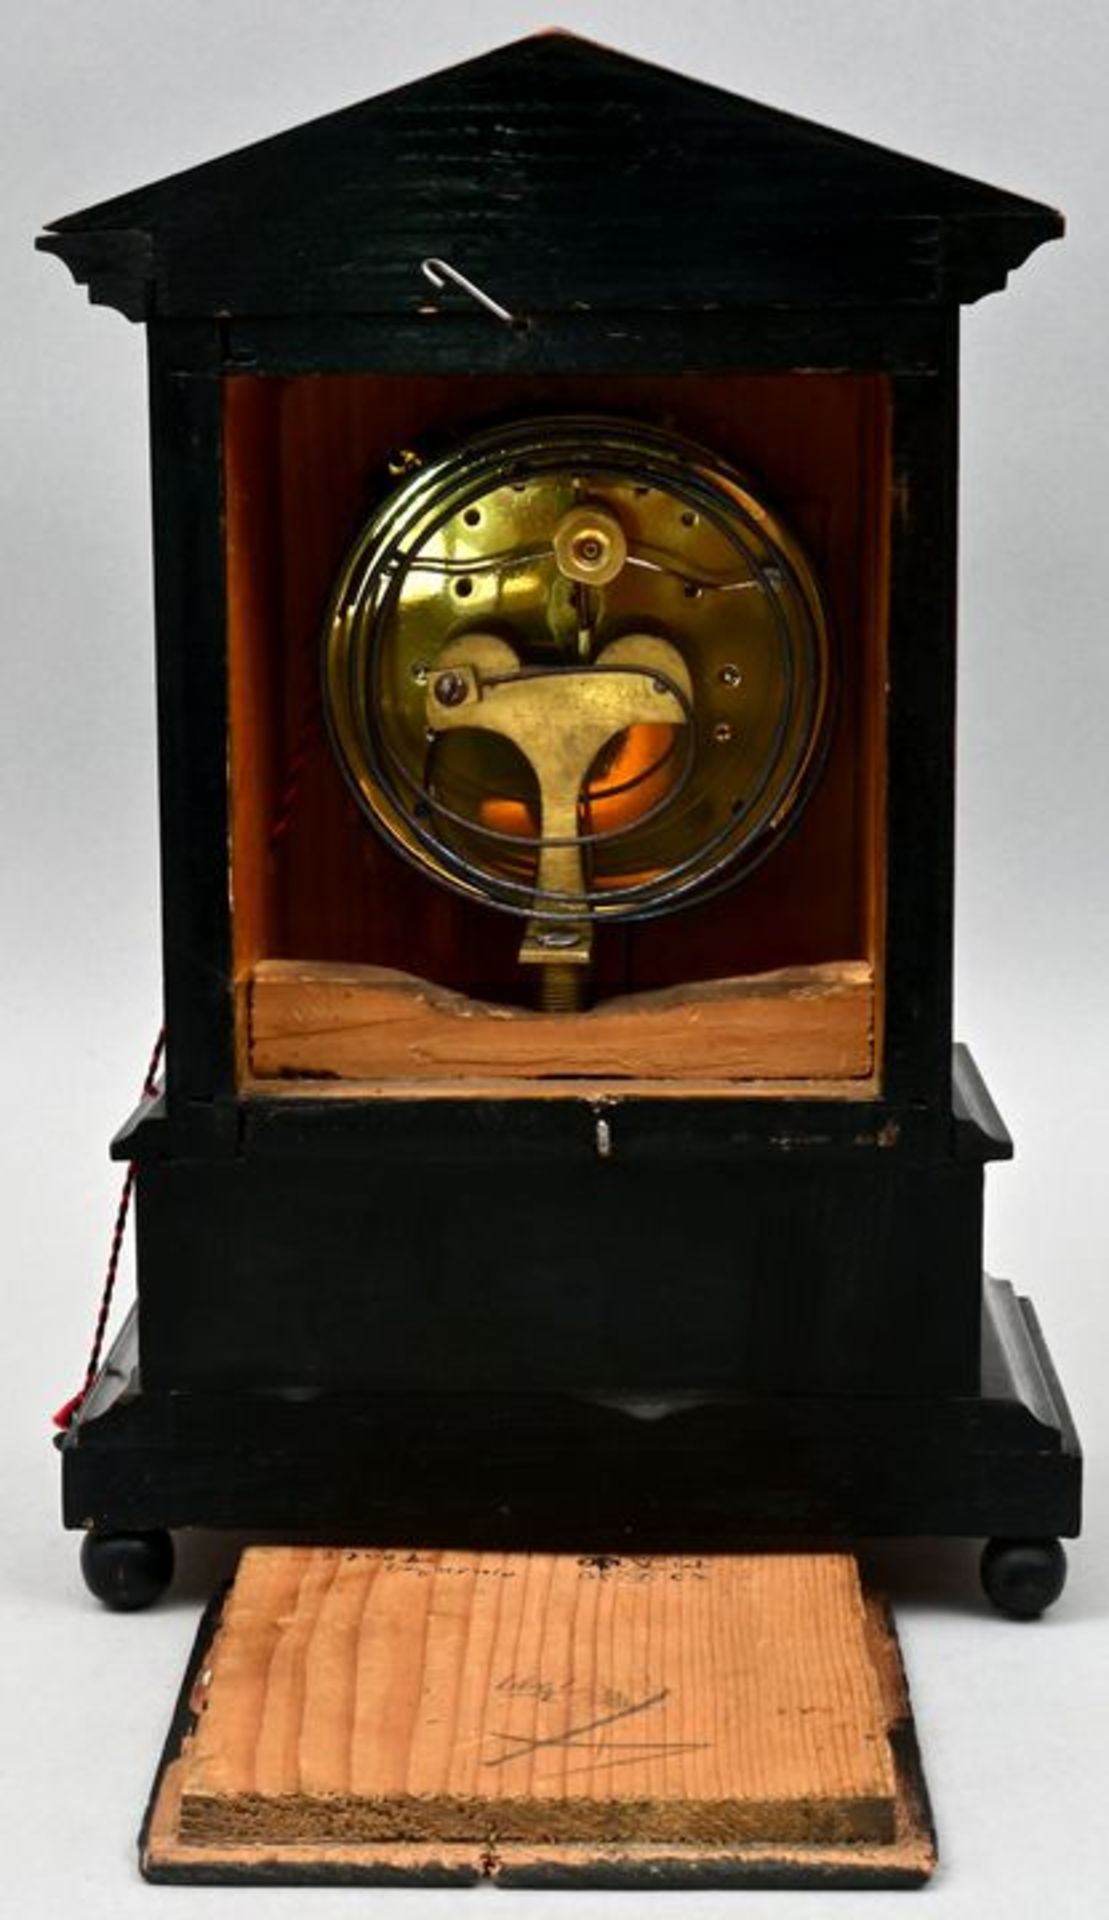 Tischuhr / Table clock - Image 3 of 3